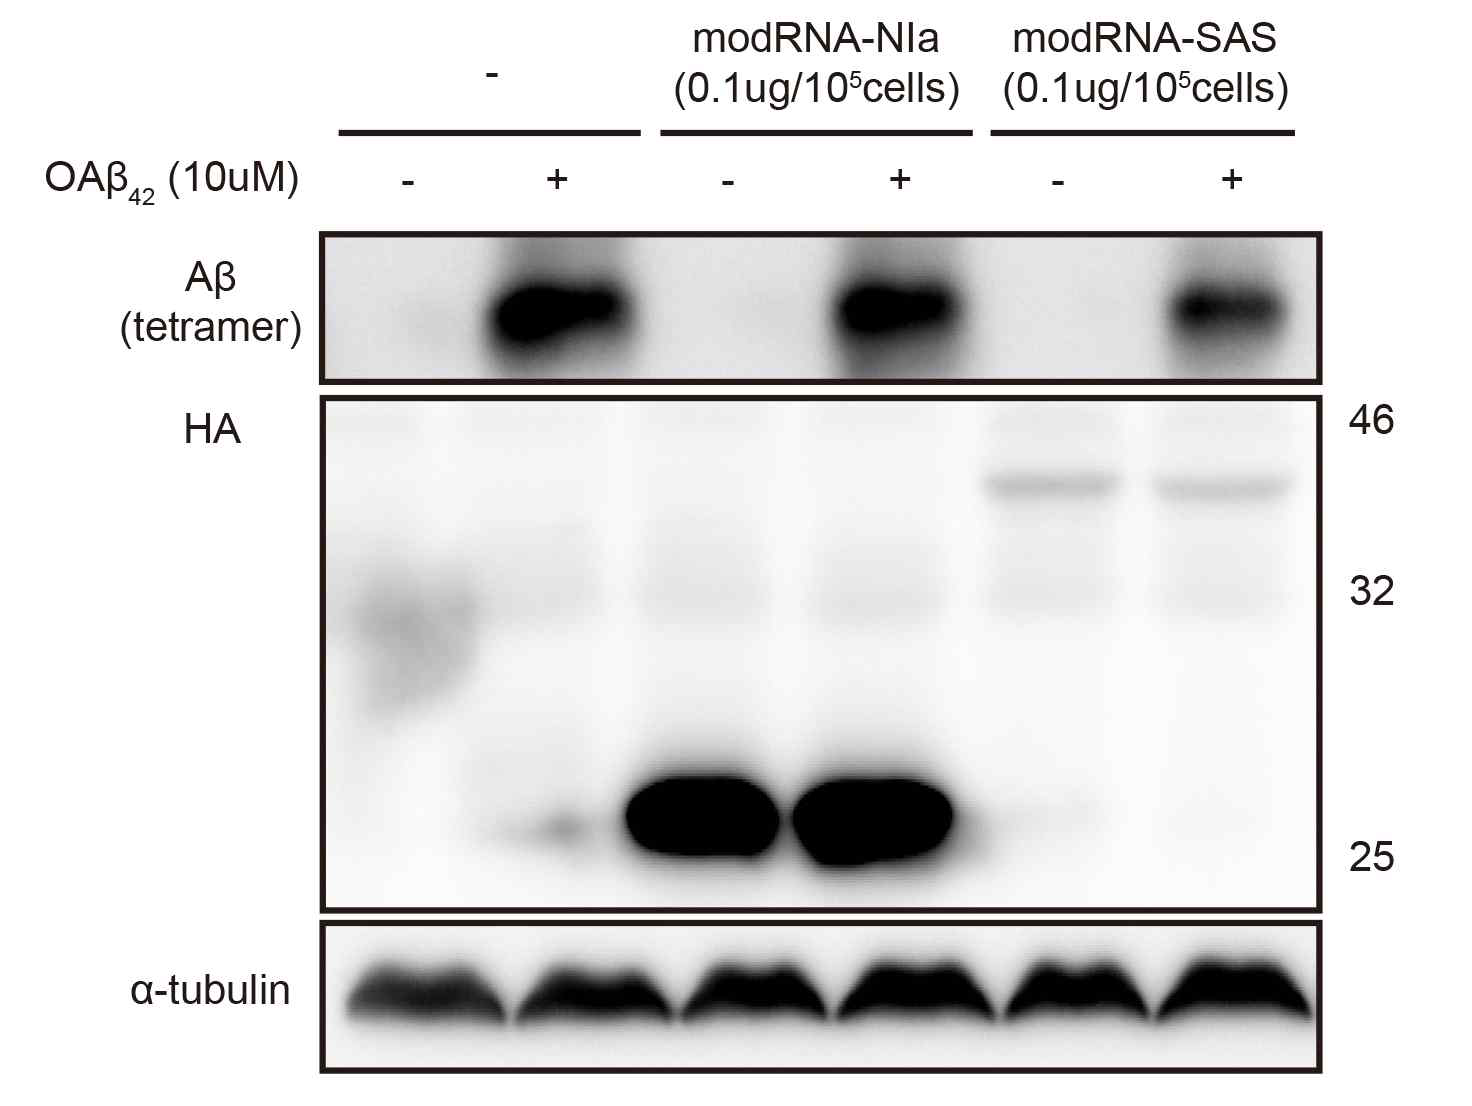 modRNA-NIa와 modRNA-SAS의 발현 및 활성 확인 Western blot을 통해 105개의 세포에 동일한 양 (0.1μg)의 modRNA-SAS와 modRNA-NIa를 처리하였을 경우, SAS의 발현량이 NIa에 비해 3배 정도 적음을 확인